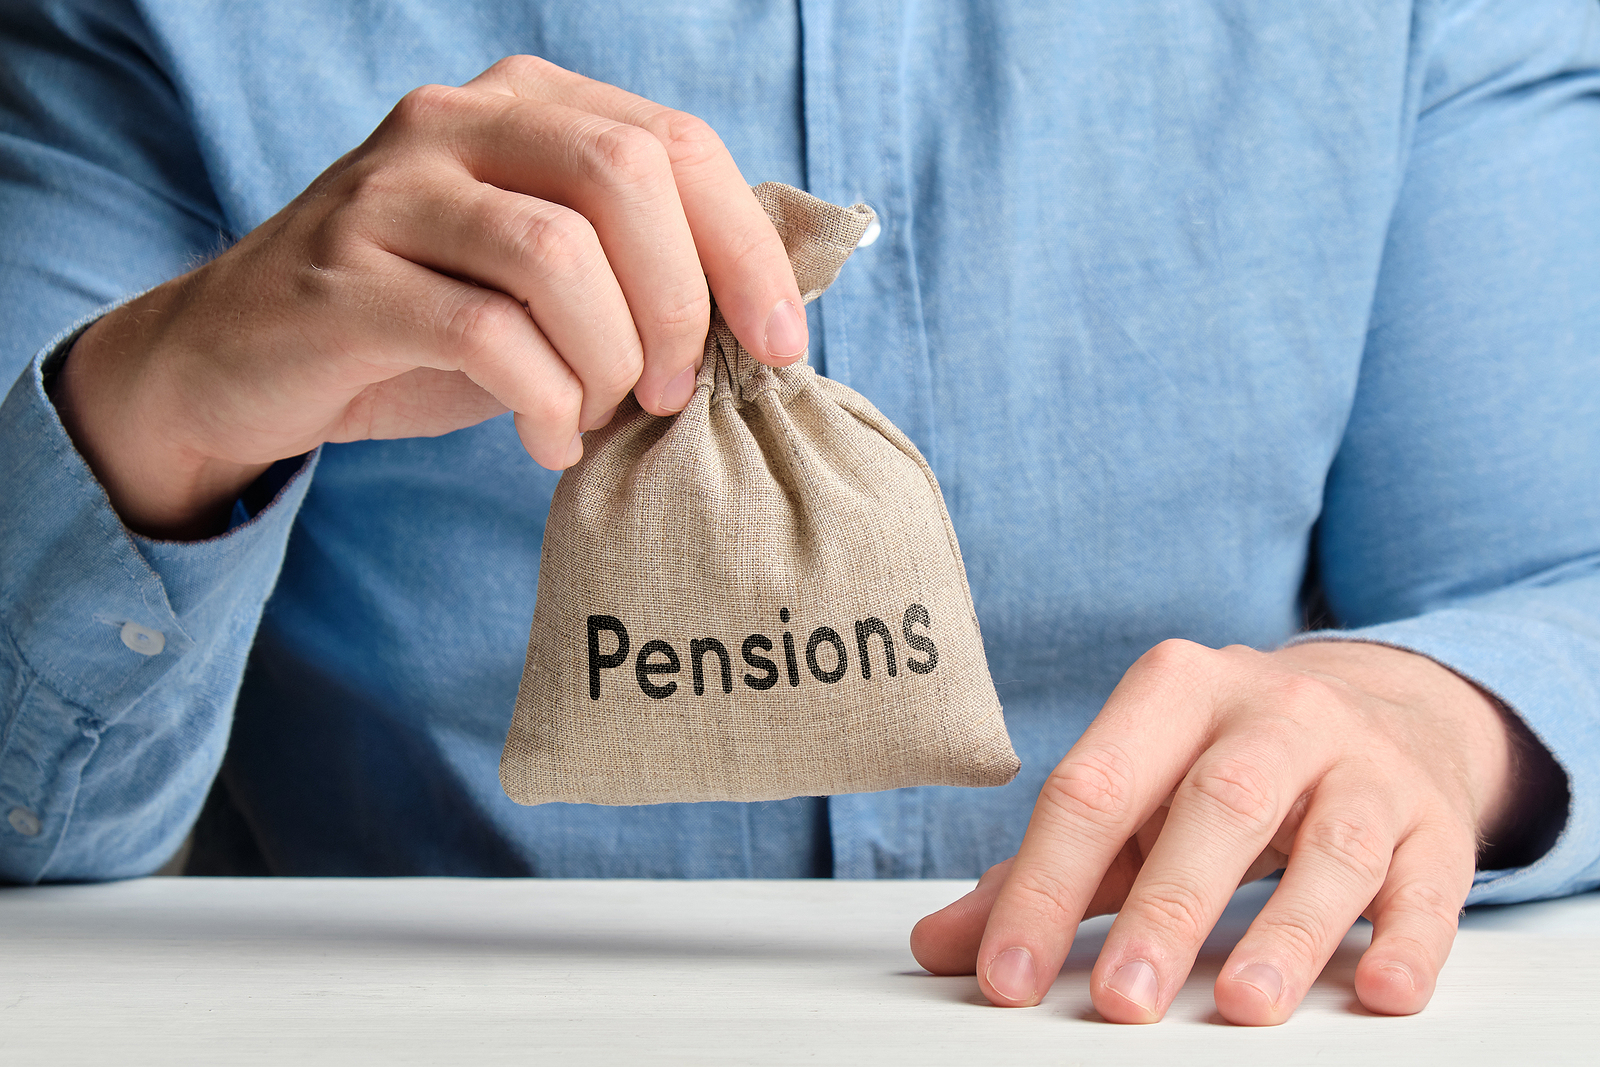 Auto-enrolment pensions scheme ‘on track’